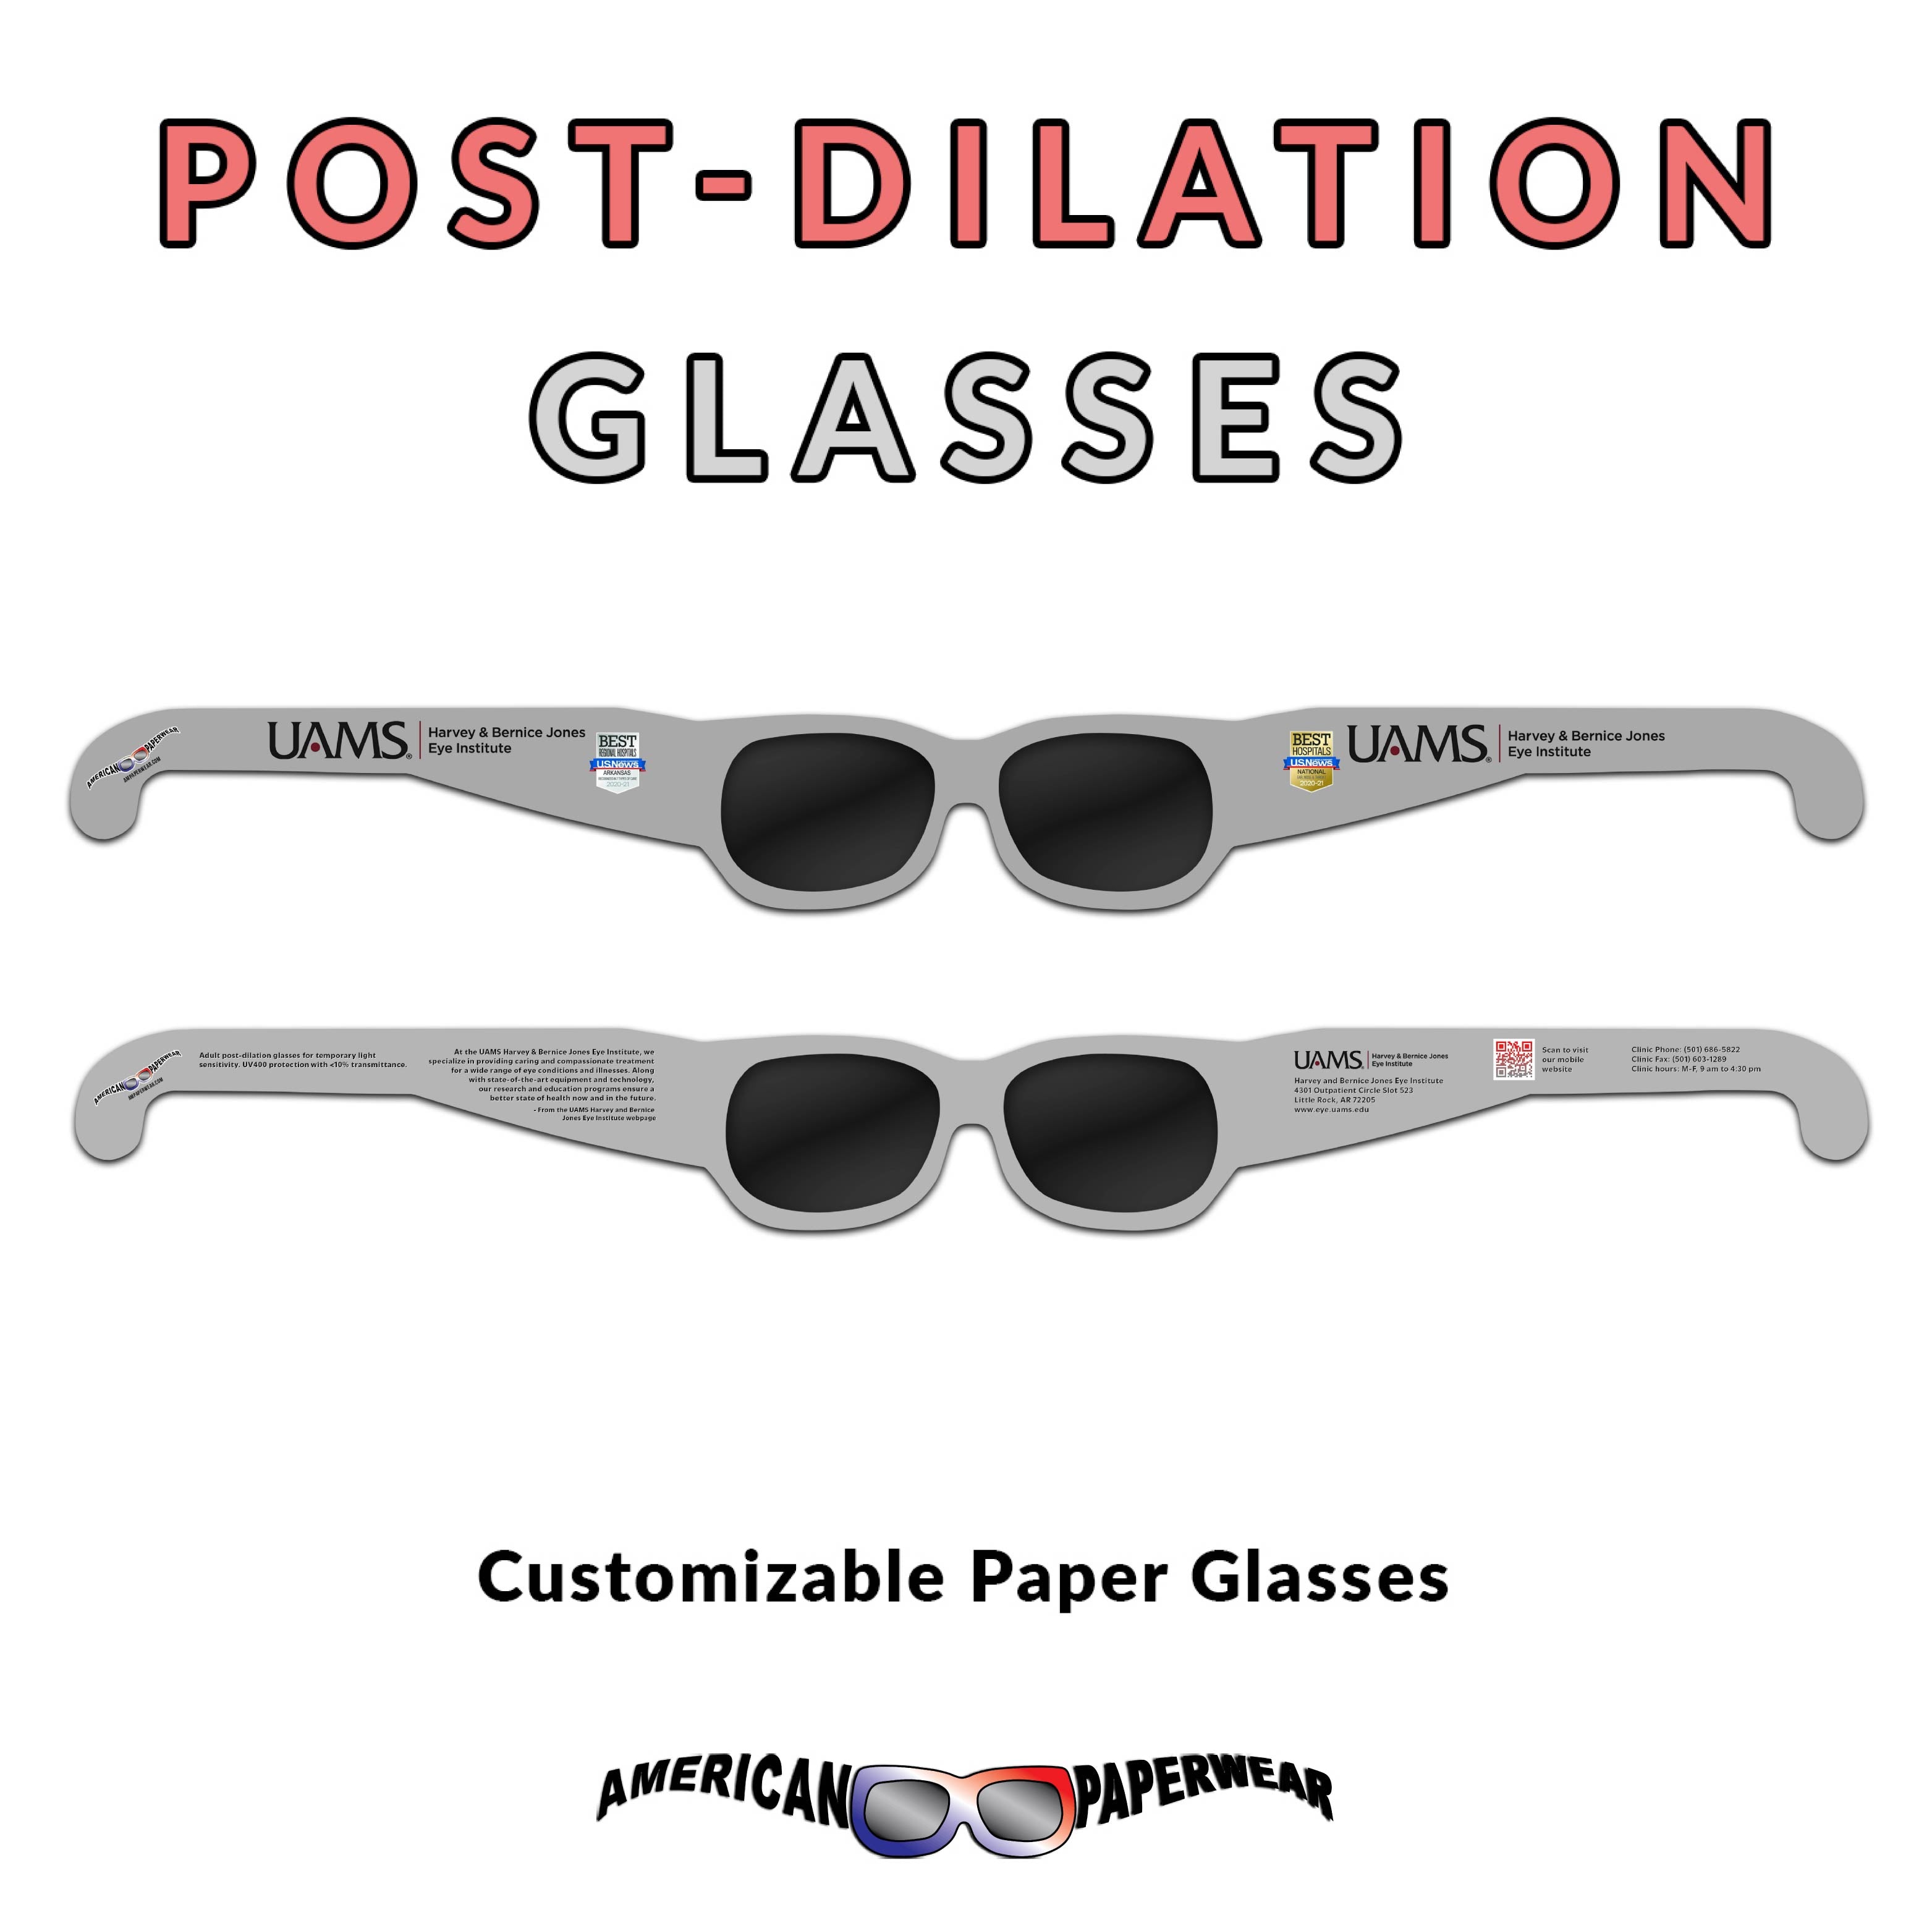 Post-dilation glasses